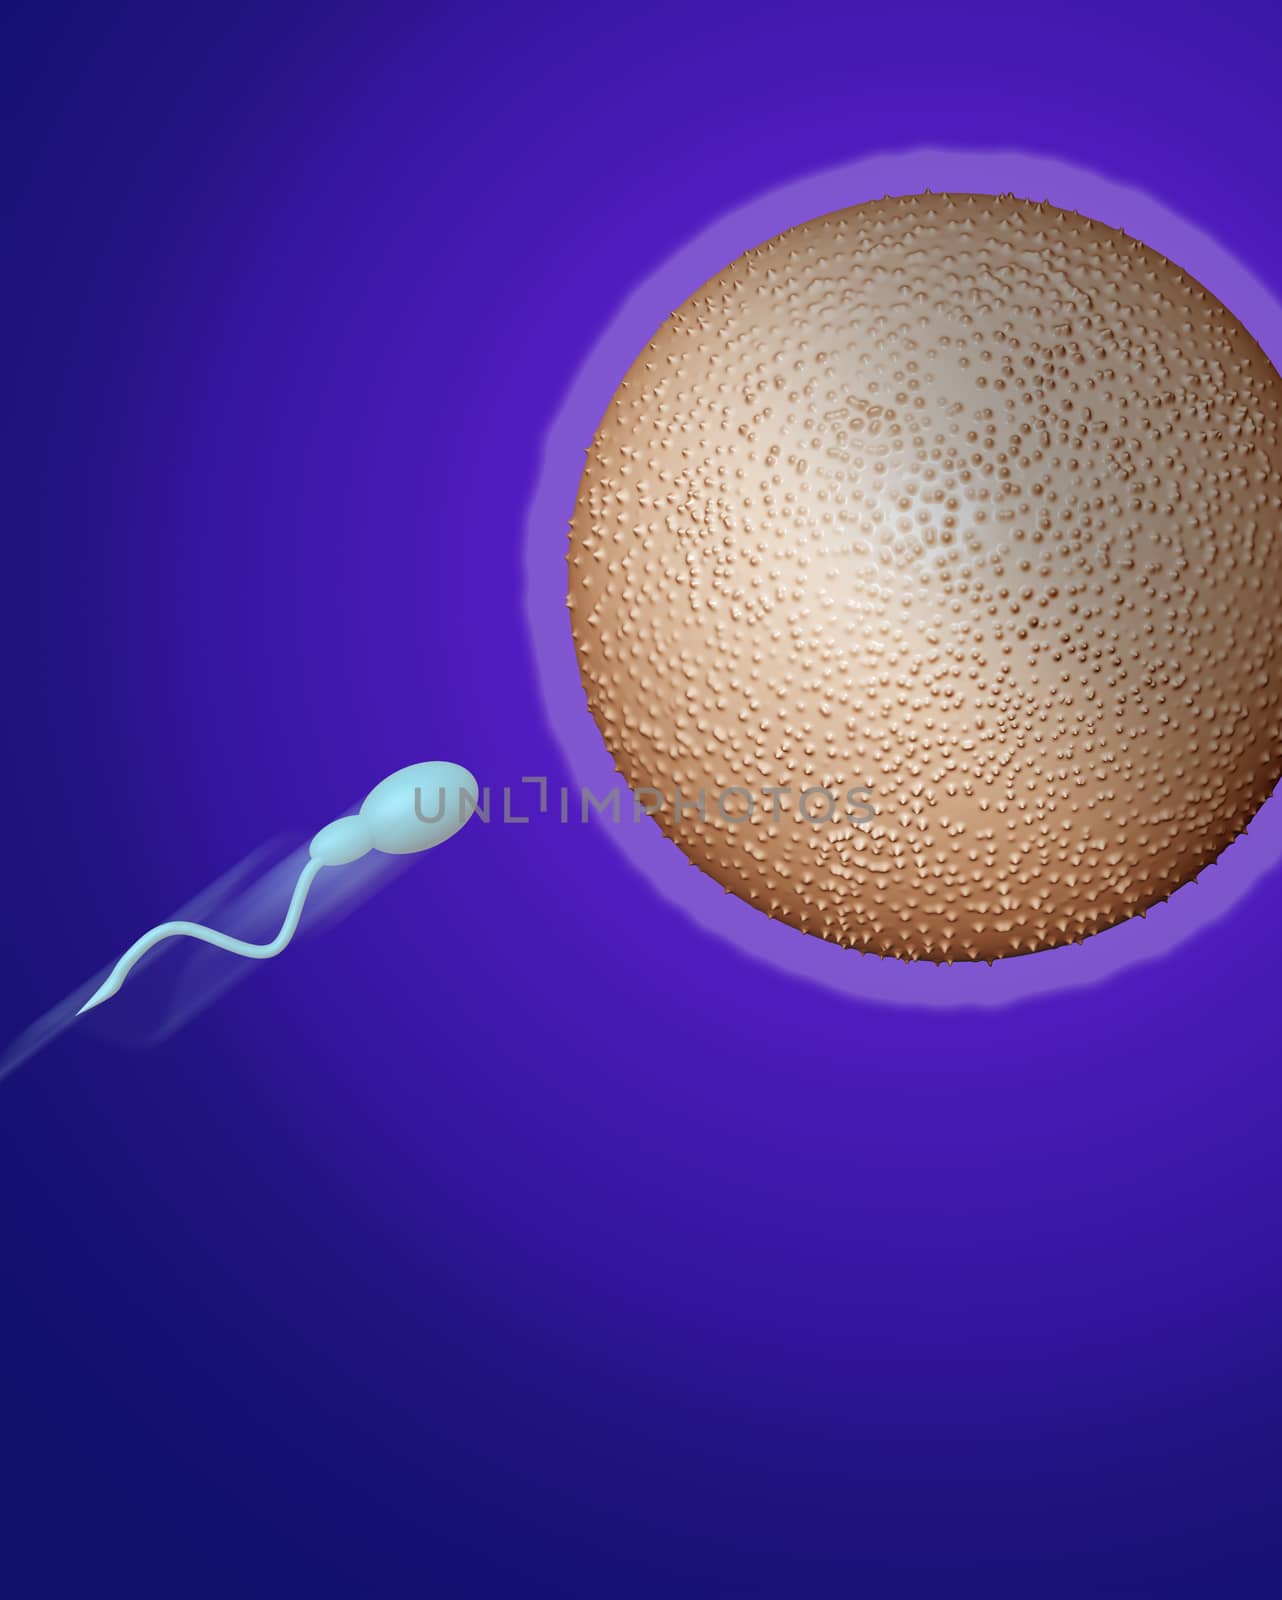 sperm heading towards egg made in 3d software